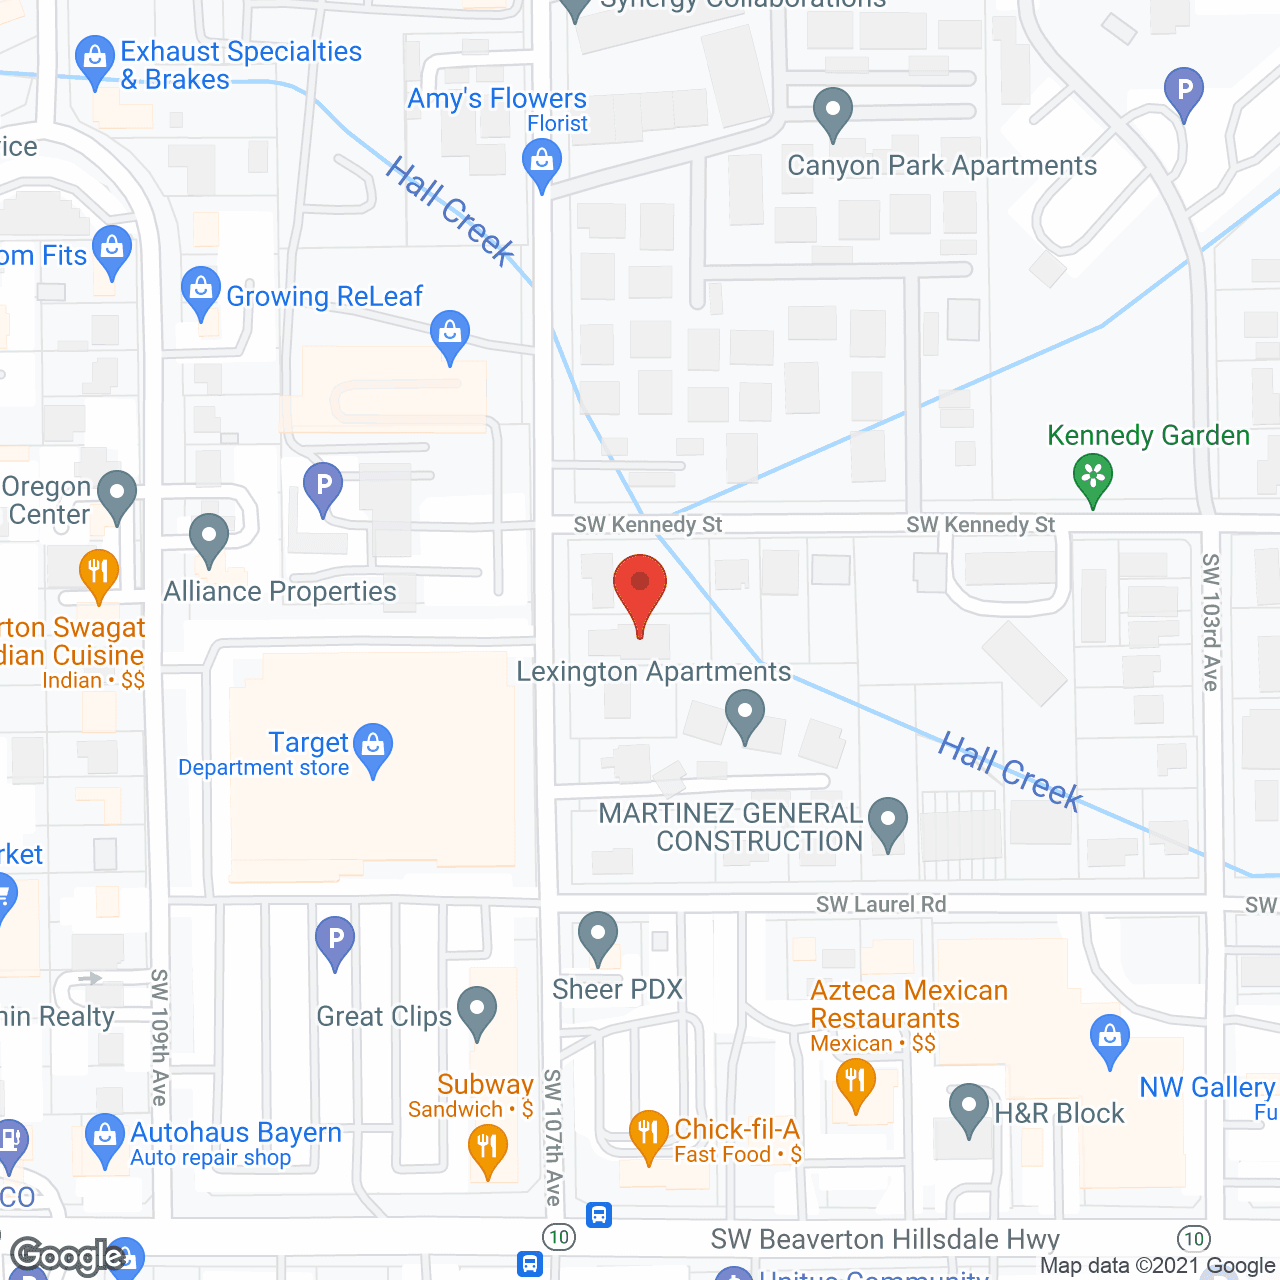 Raleighwood Senior Care Home in google map